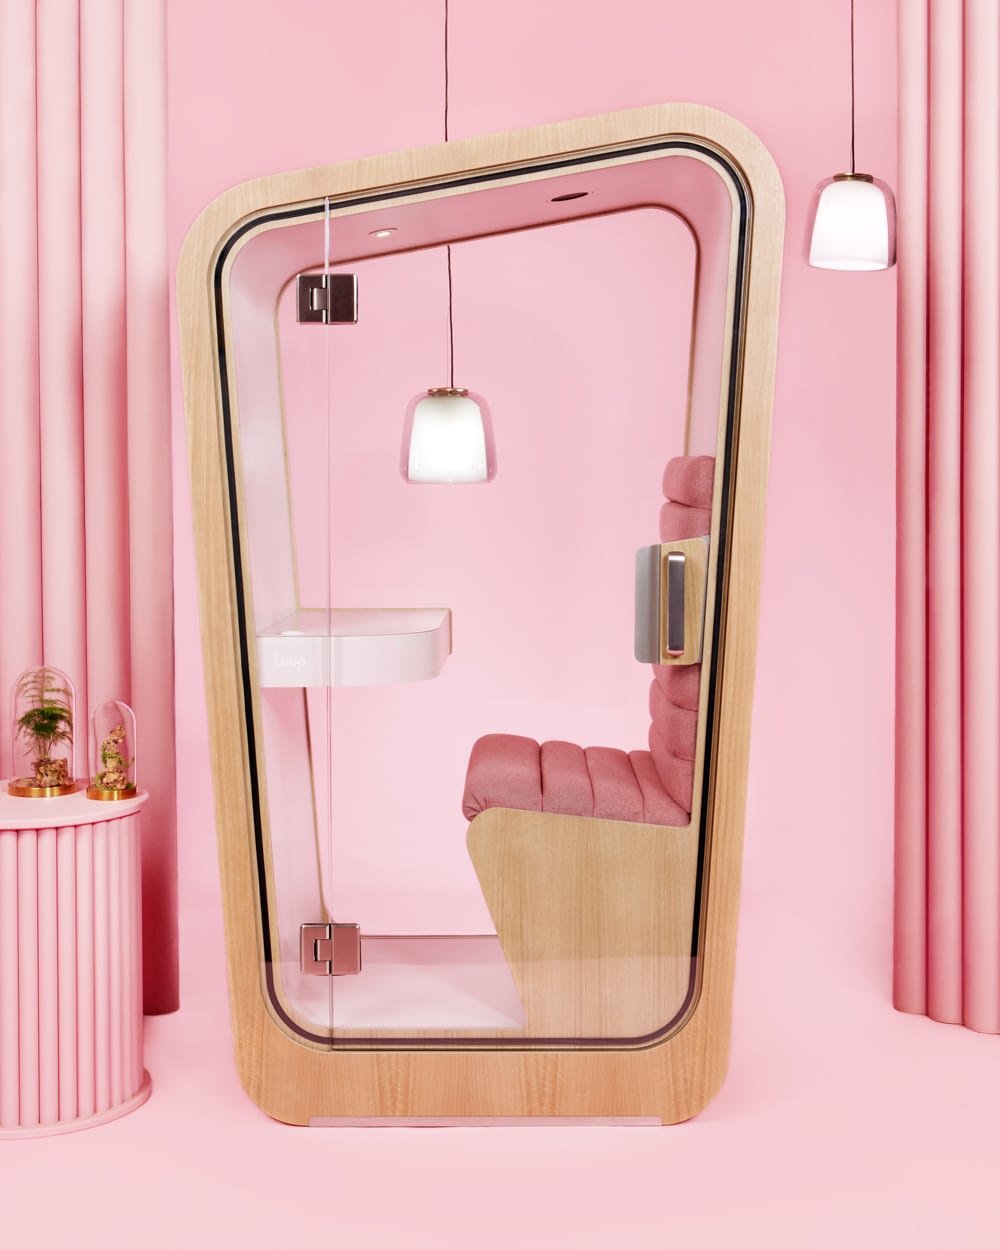 Image of pink focus room